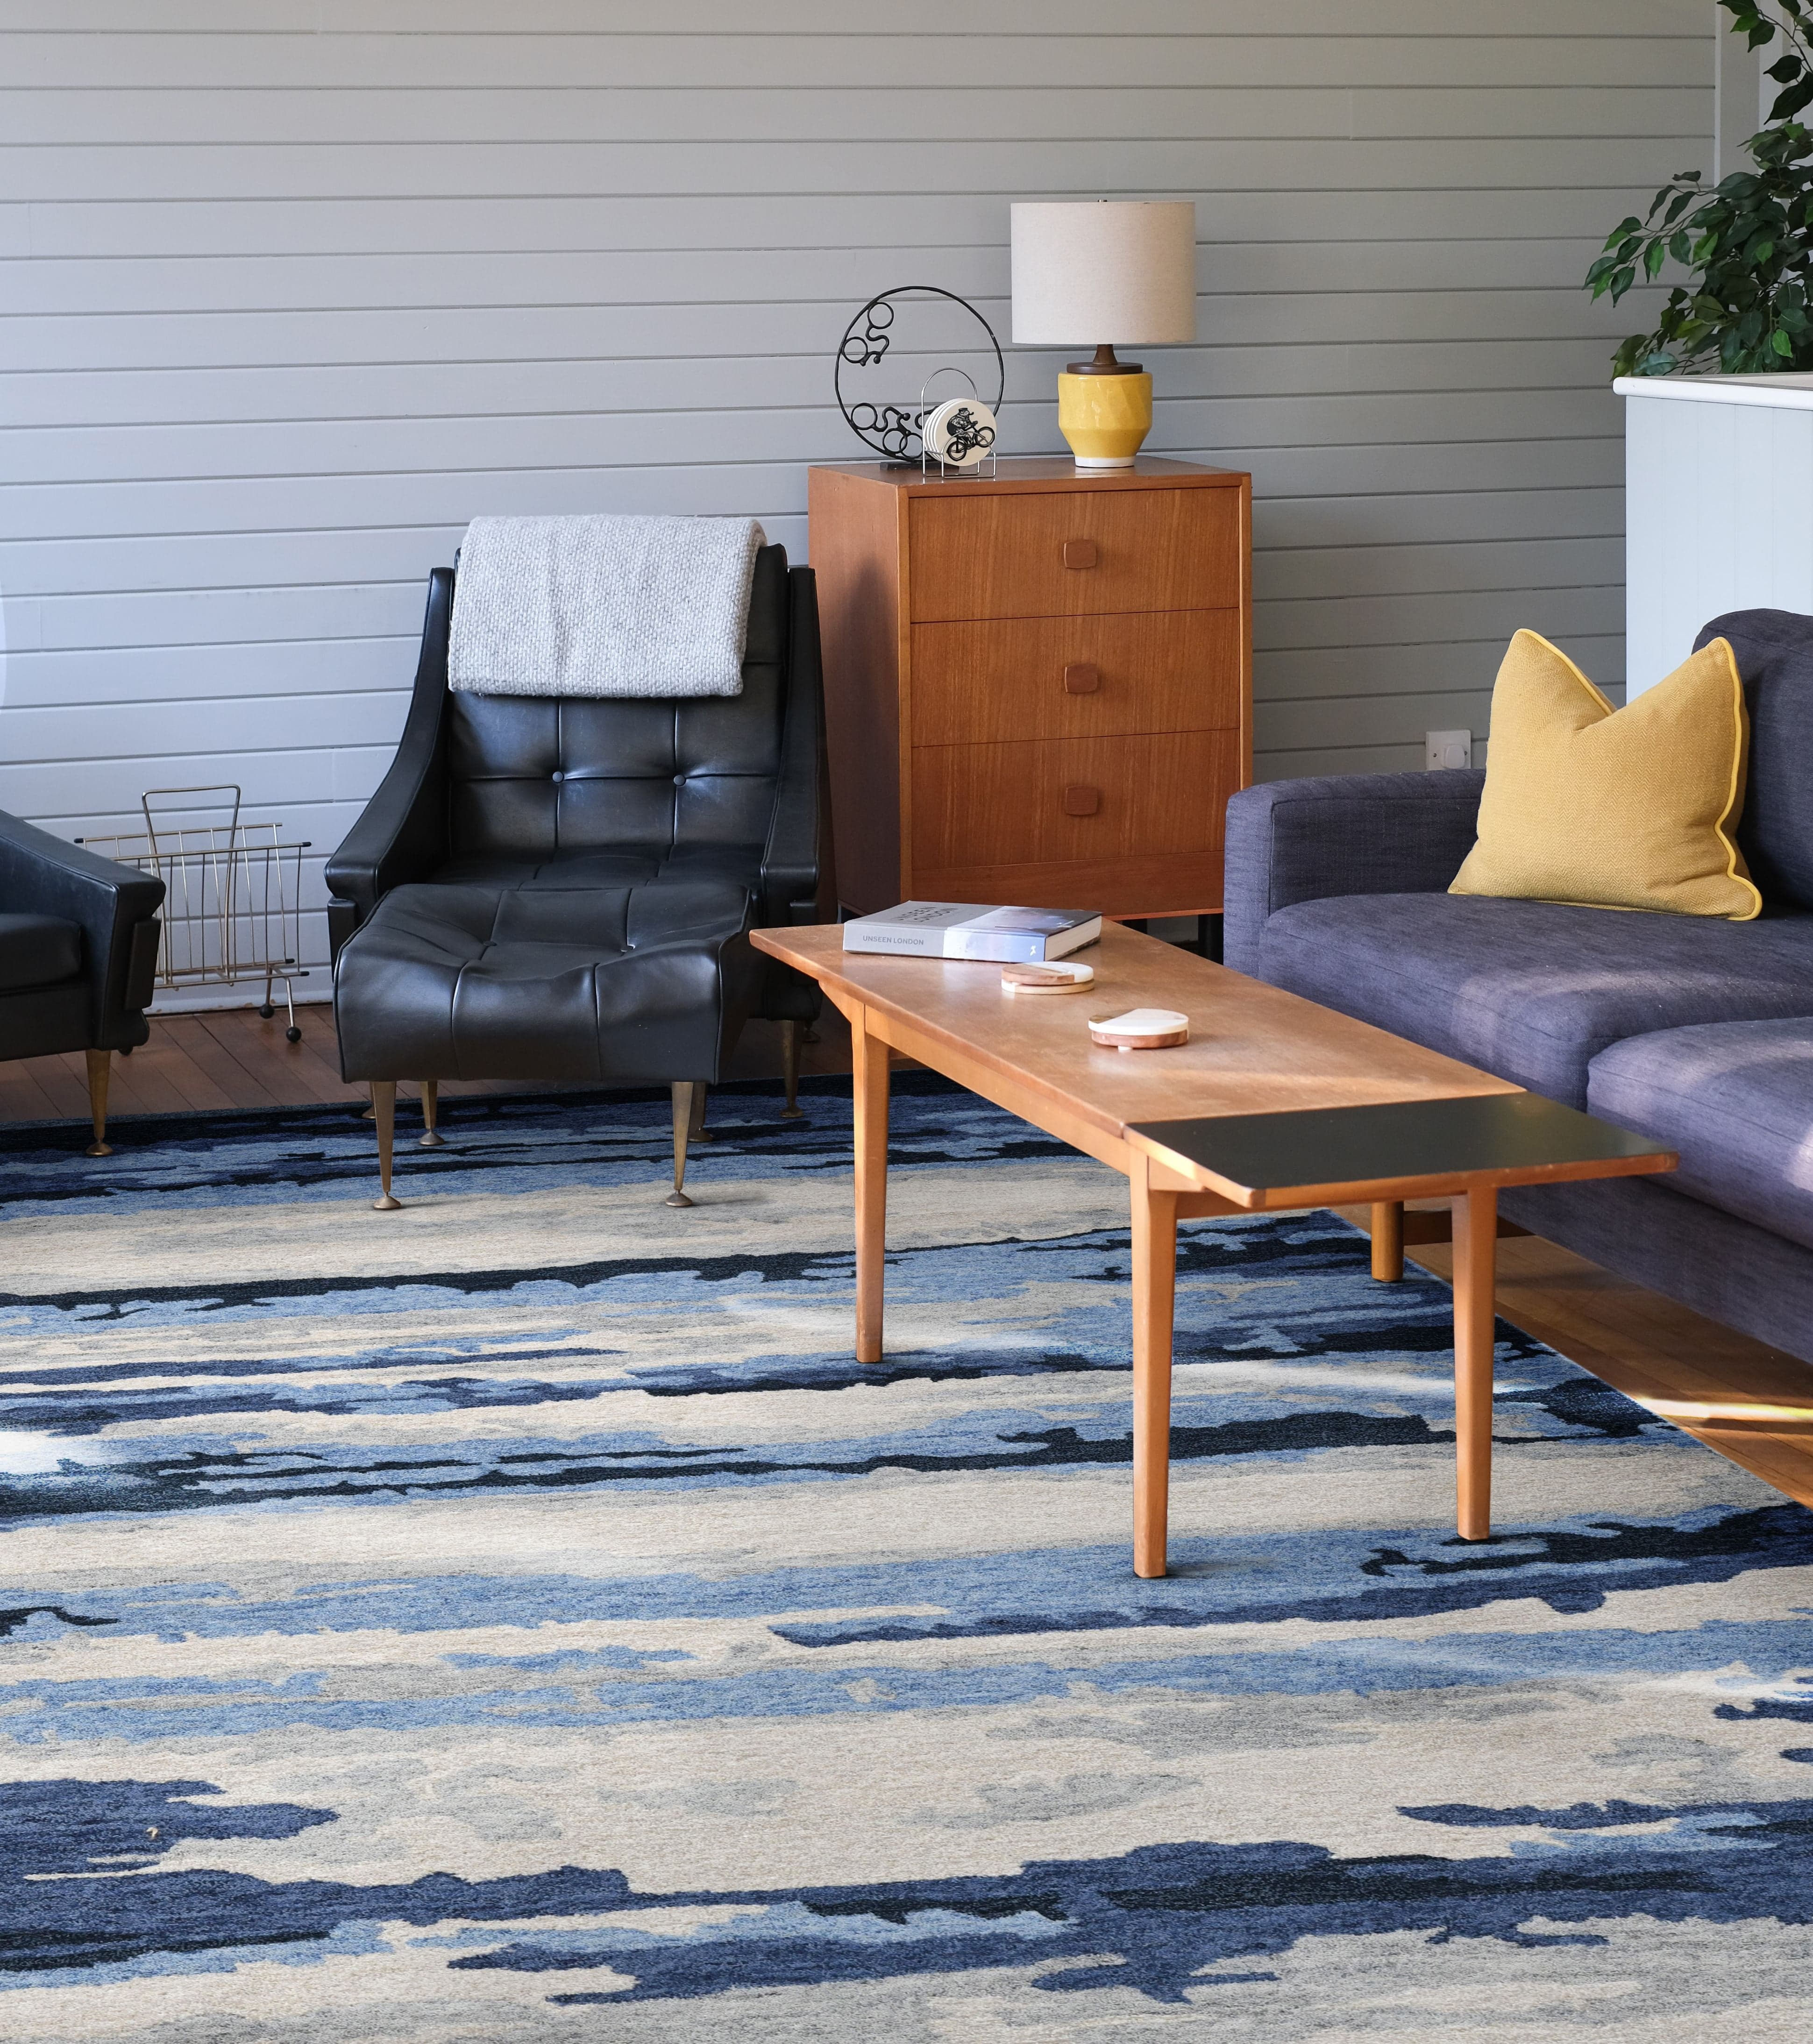 Navy Wool & Viscose Abstract 8X10 Feet  Hand-Tufted Carpet - Rug